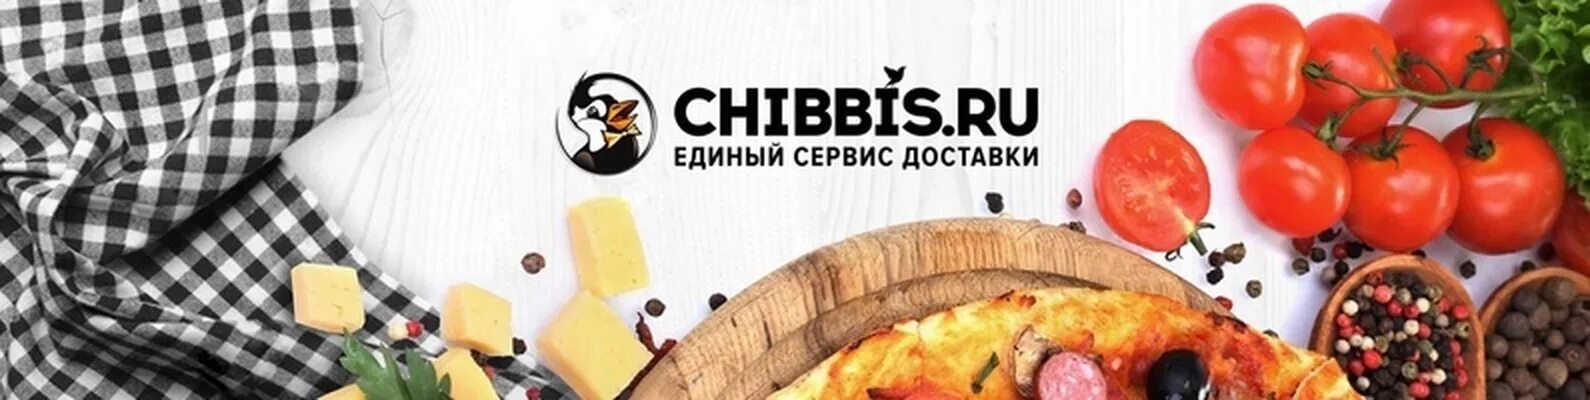 Chibbis доставка еды. Chibbis логотип. Chibbis еда. Chibbis доставка логотип.